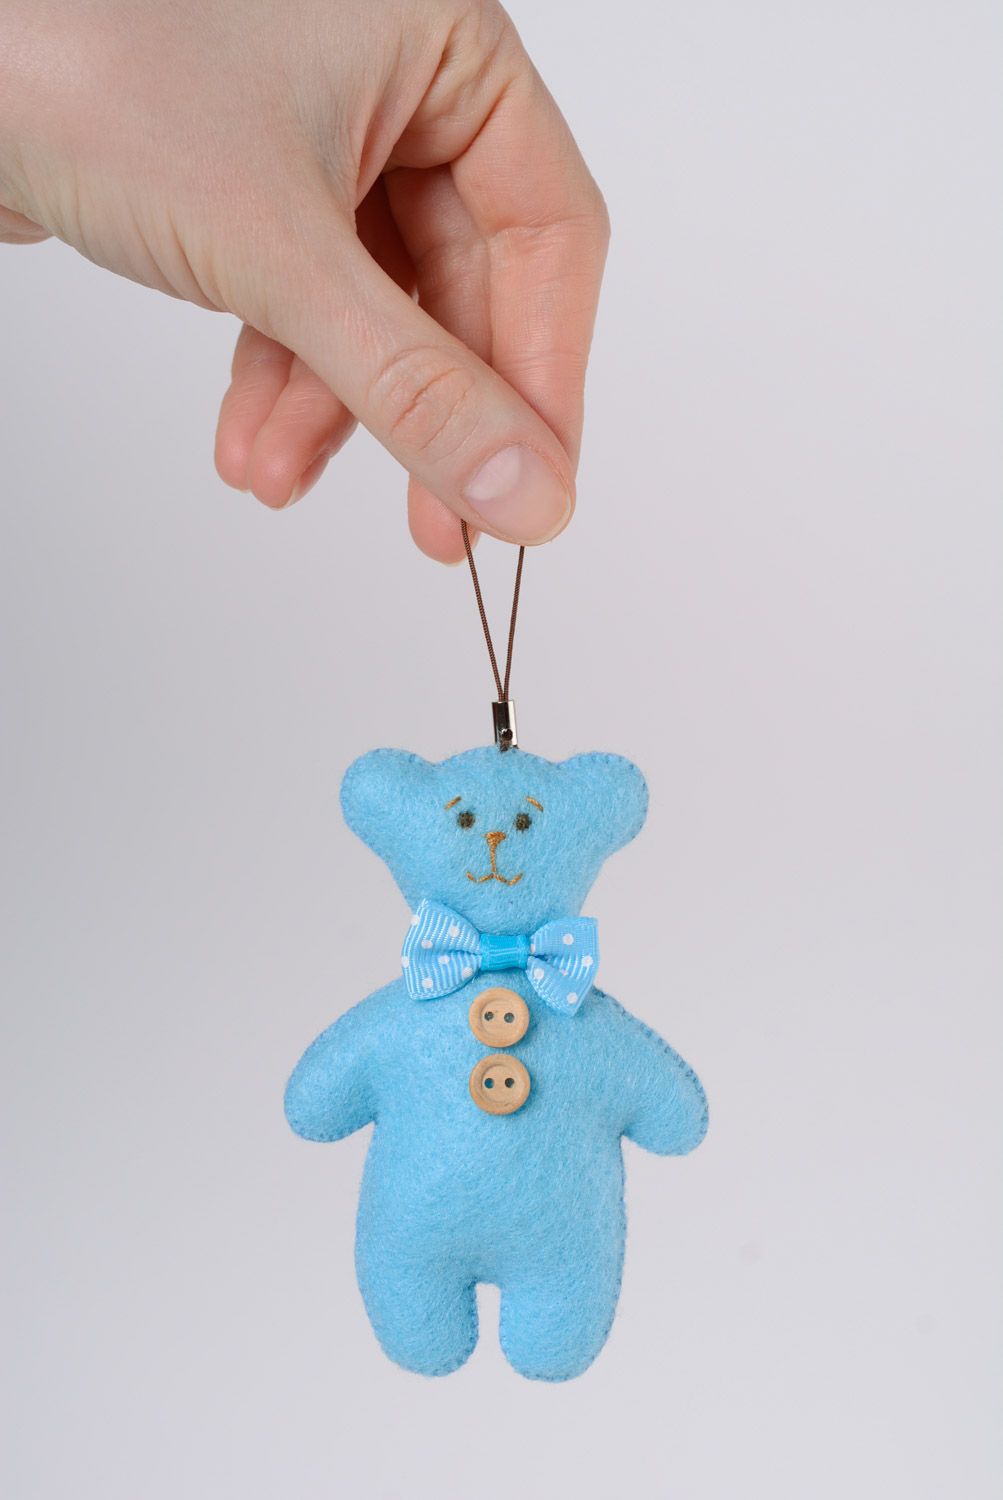 Handmade beautiful cute keychain toy blue bear made of felt for keys or bag  photo 4